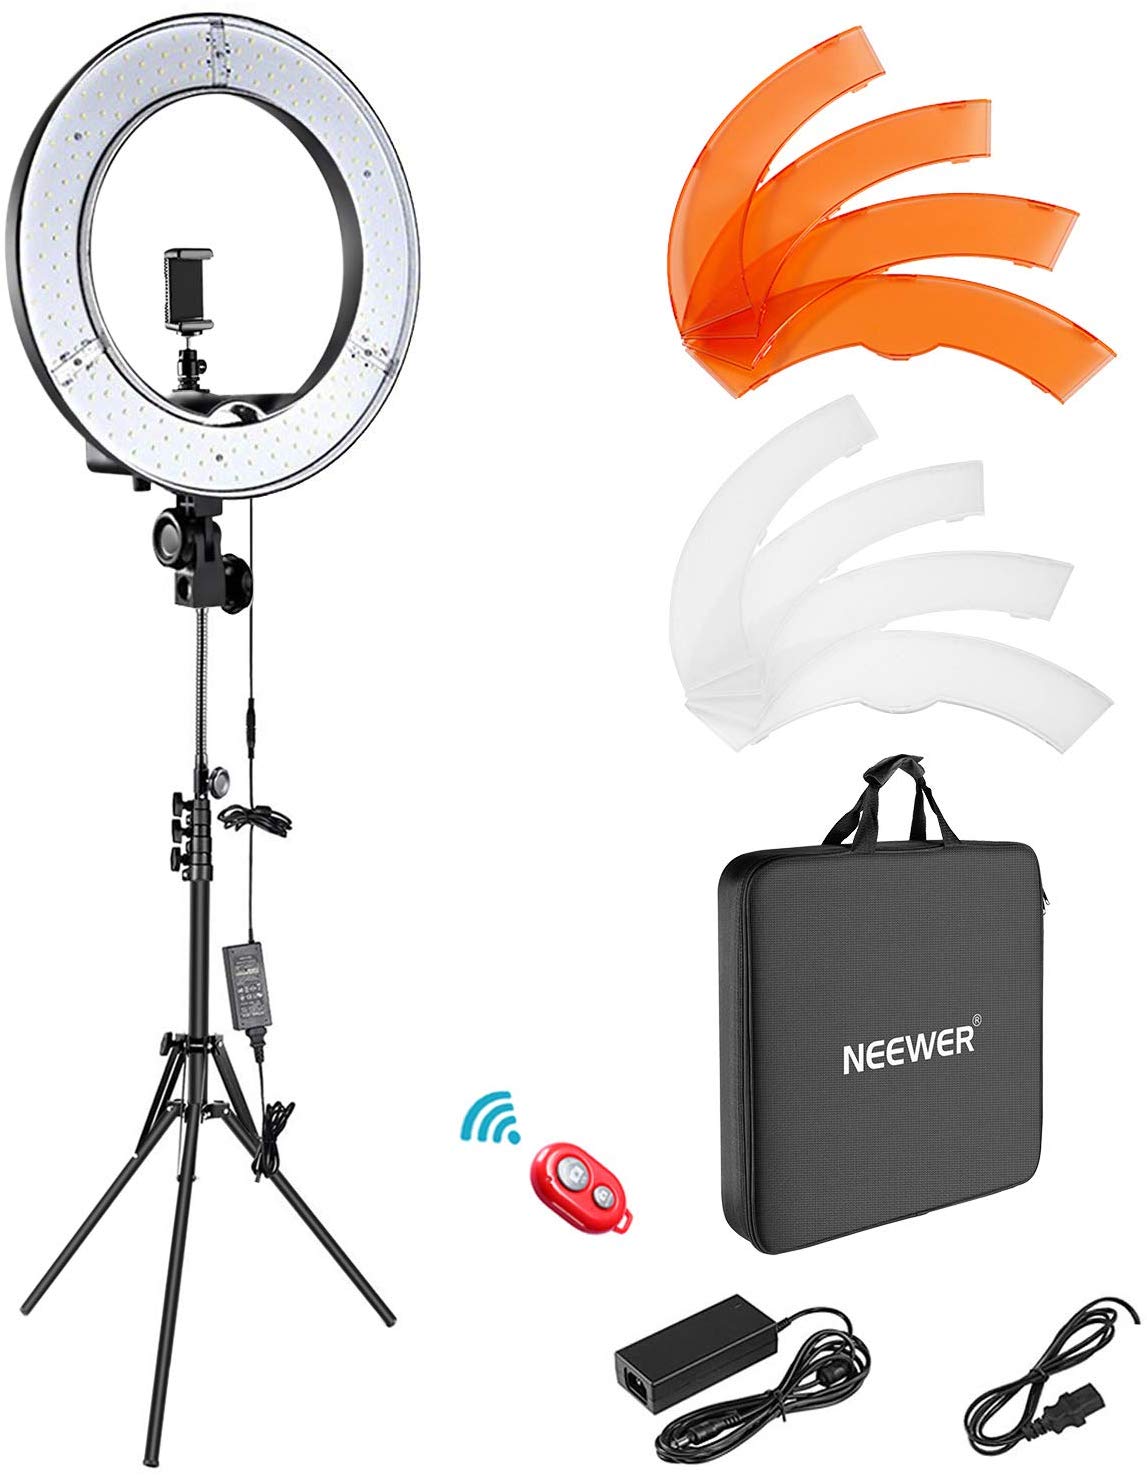 neewer ring light kit amazon promo code